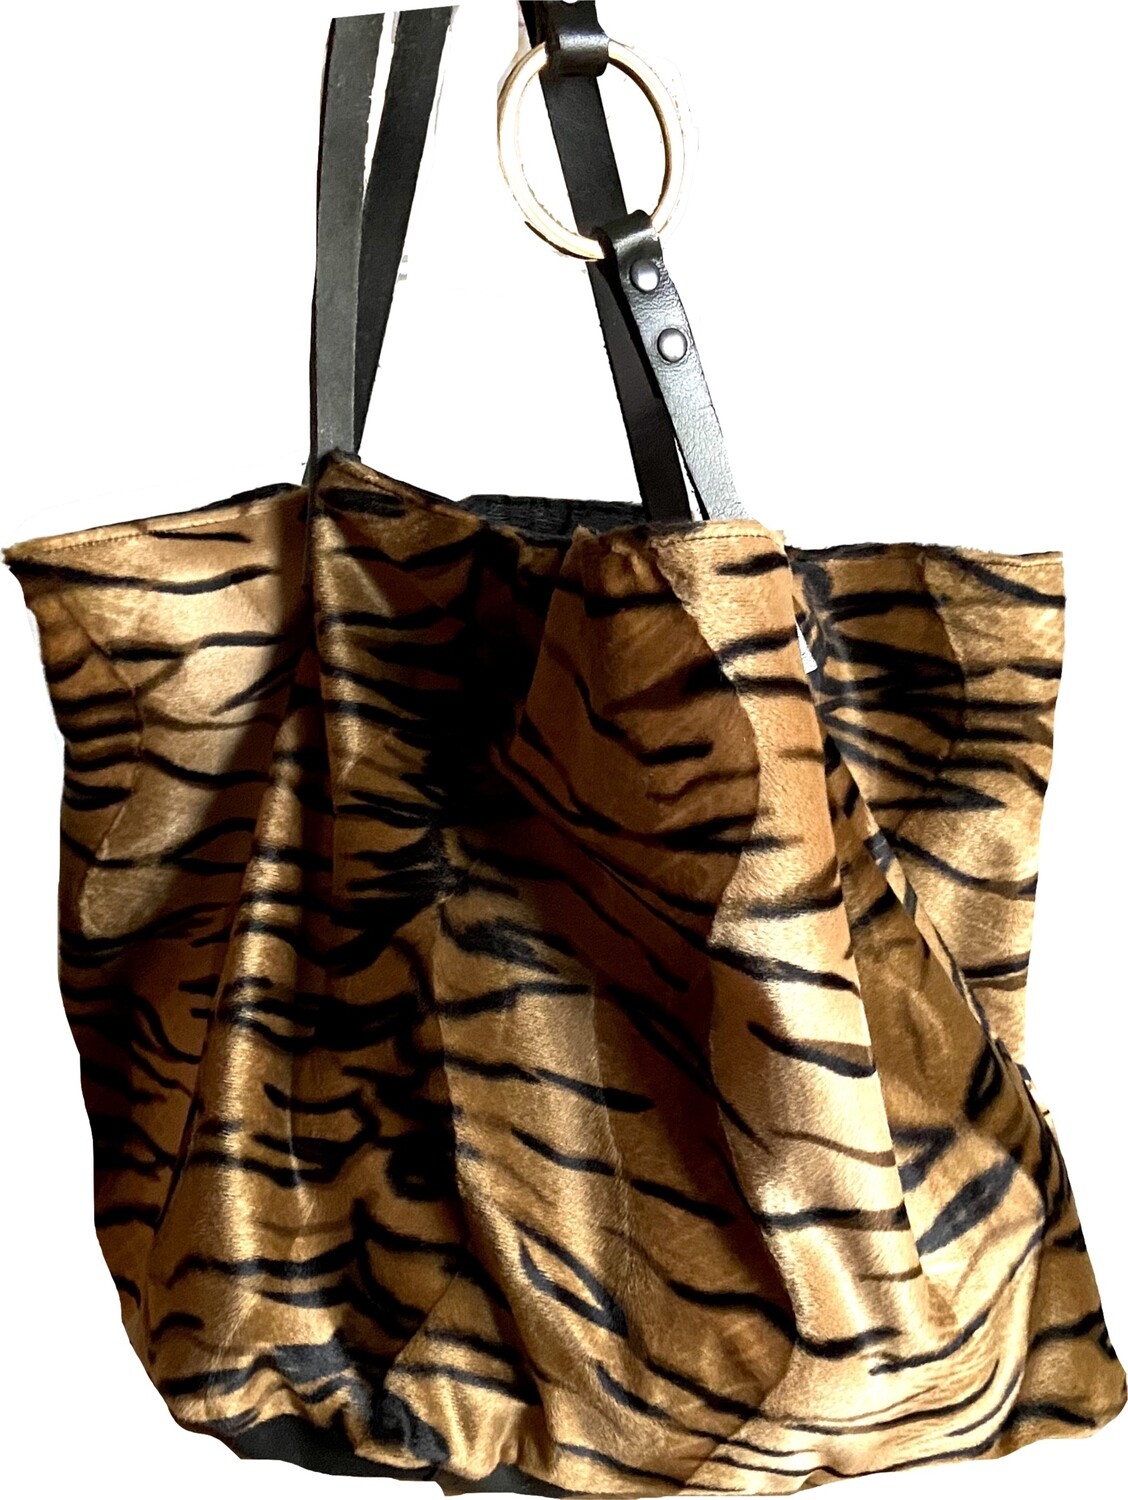 TEKOA 665 borsa donna in eco-pelliccia tigrata